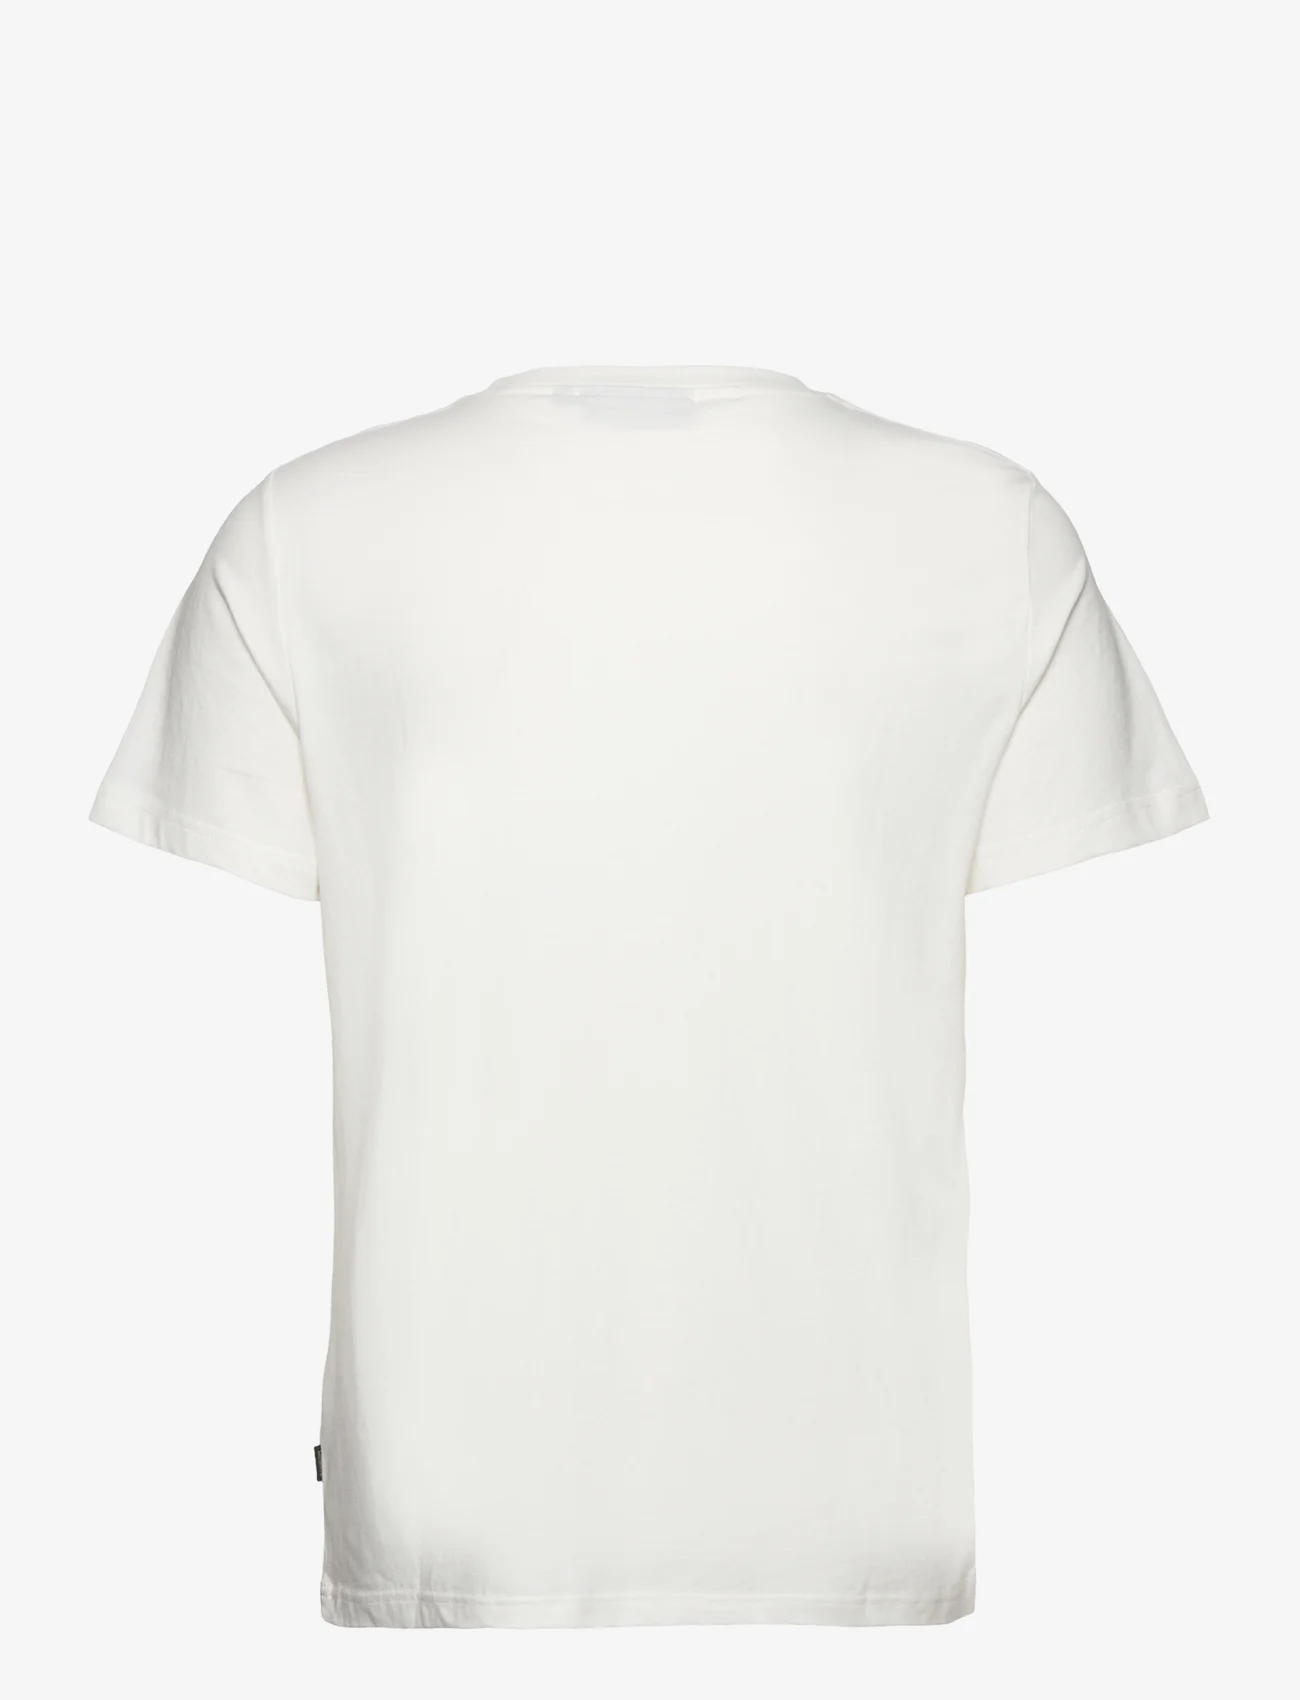 Morris - Cobham Tee - basic t-shirts - off white - 1